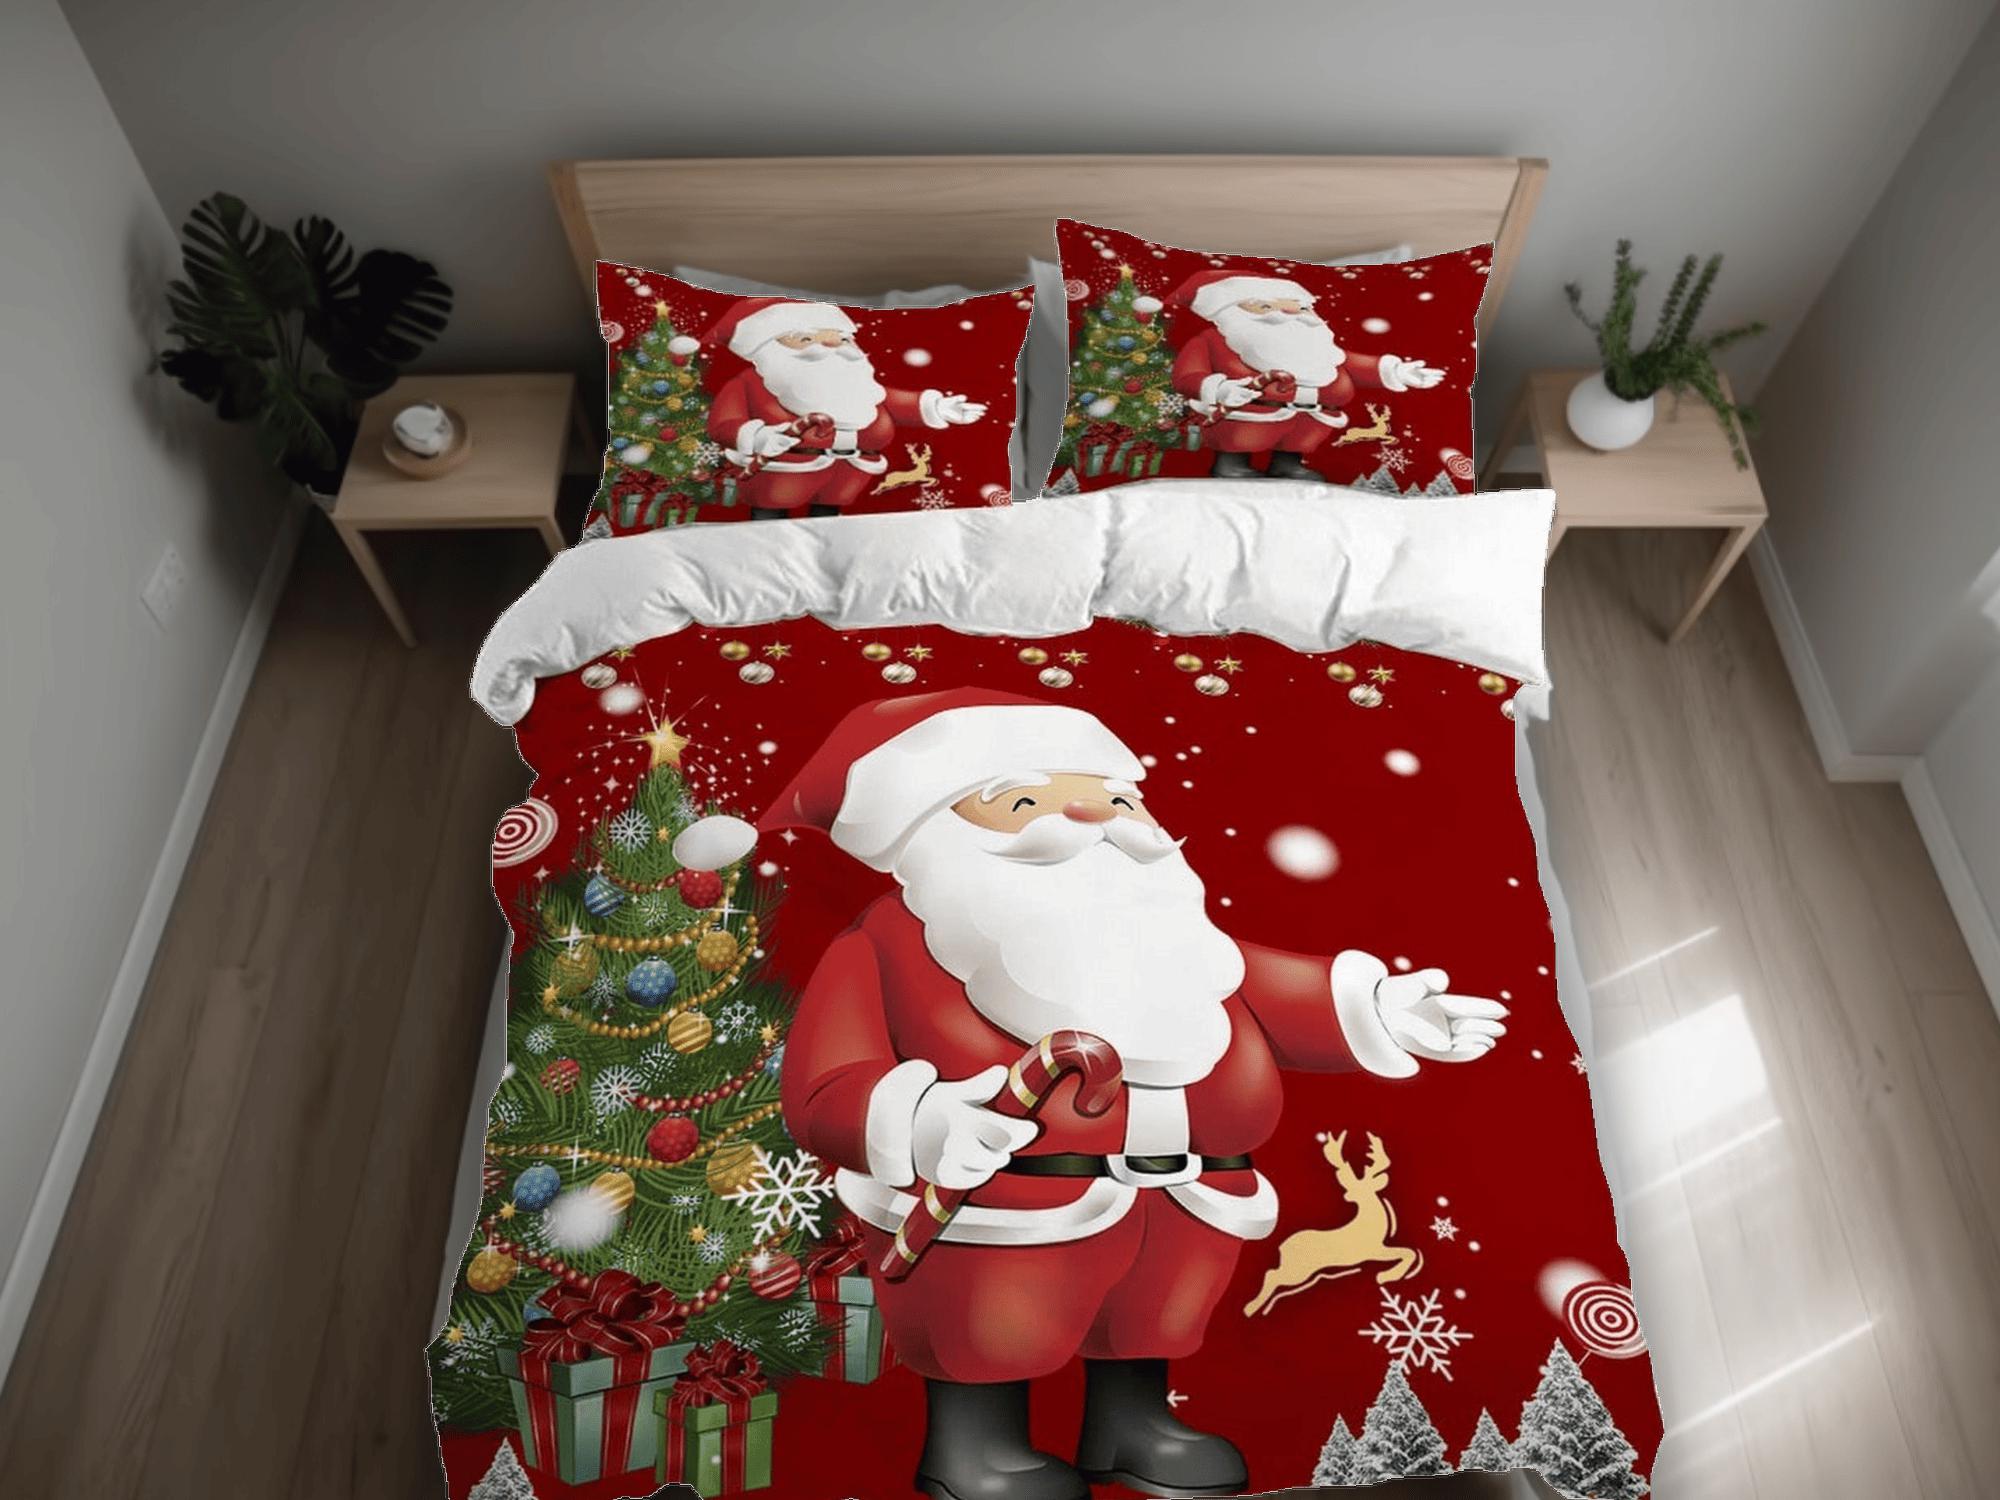 daintyduvet Santa Claus and Christmas tree bedding & pillowcase holiday gift duvet cover king queen twin toddler bedding baby Christmas farmhouse decor